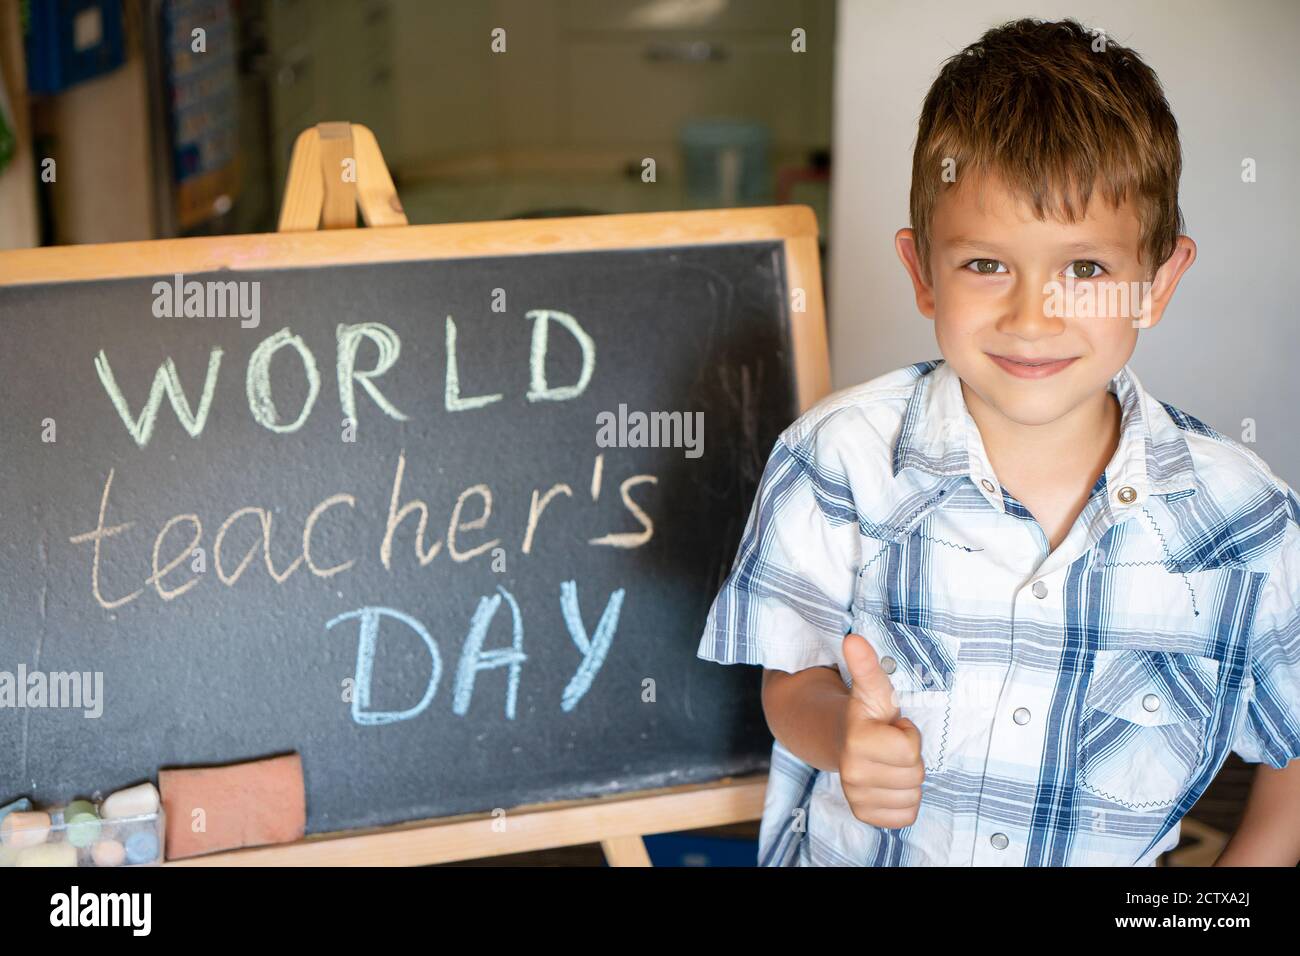 World Teacher's Day greeting, pupil boy near the chalkboard, chalk inscription text Stock Photo